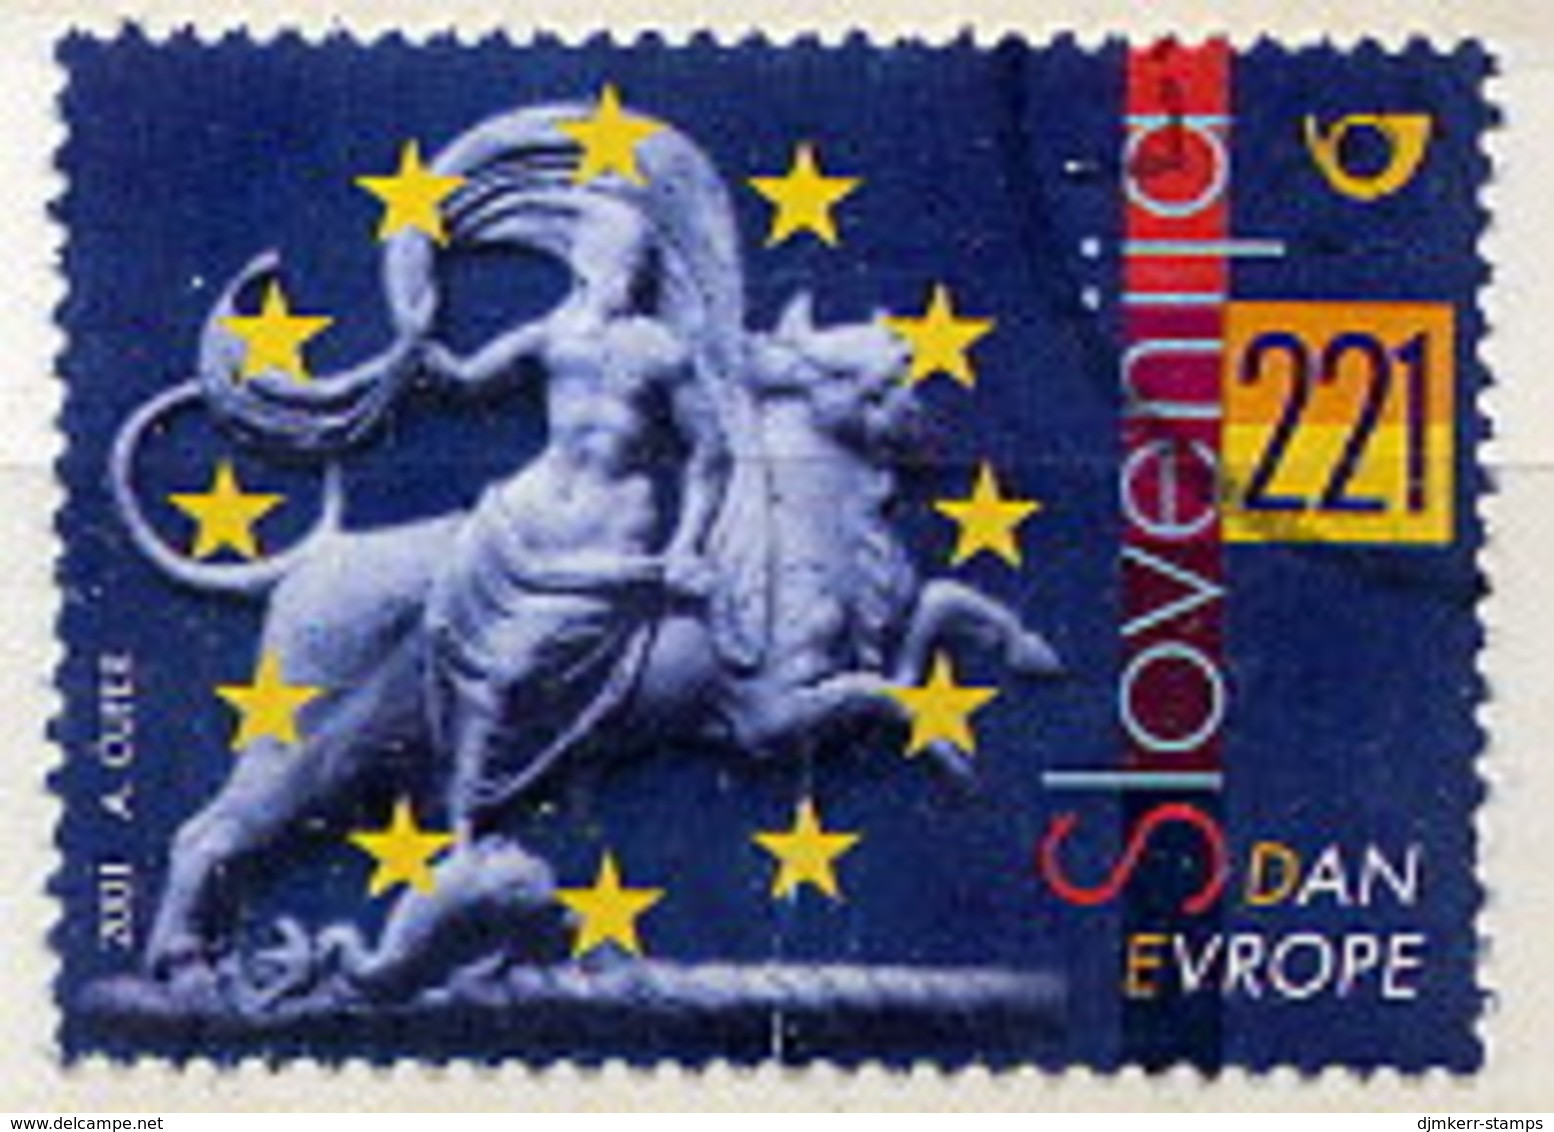 SLOVENIA 2001 Europe Day Used. Michel 348 - Slovenia